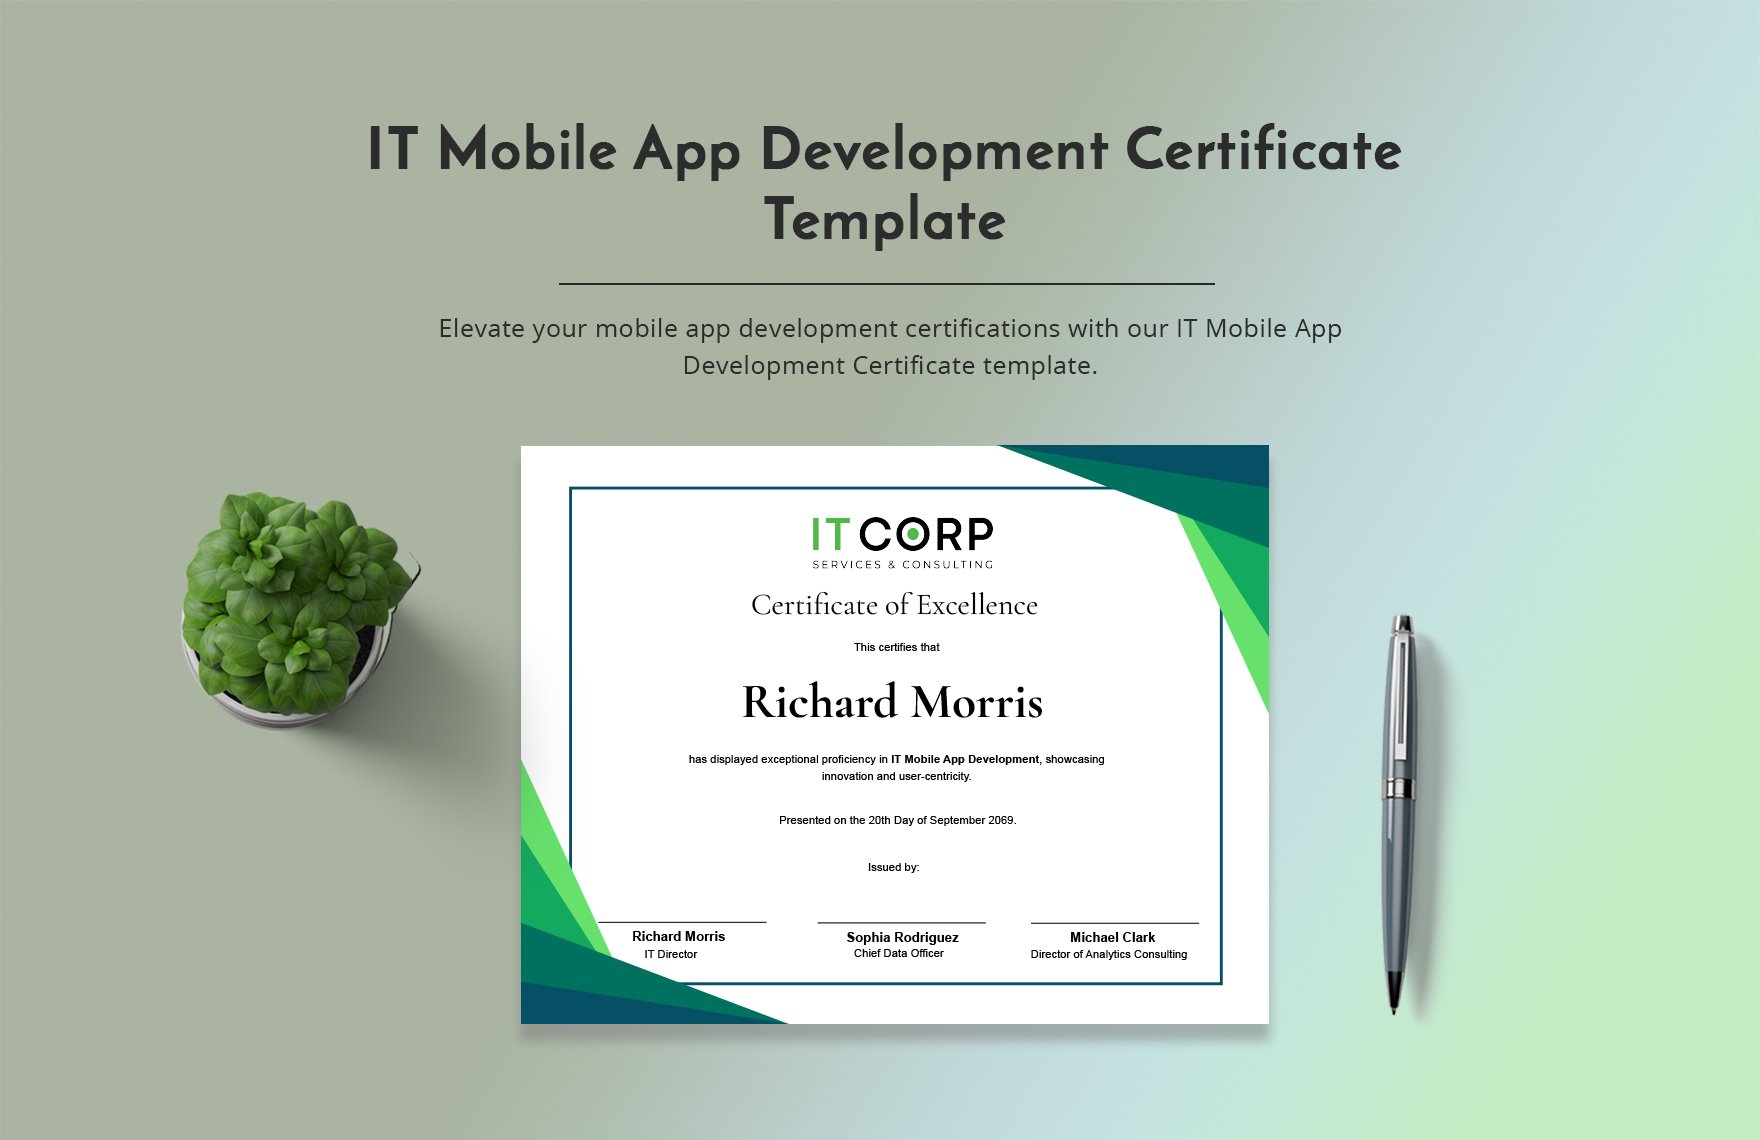 IT Mobile App Development Certificate Template in Word, Illustrator, PSD